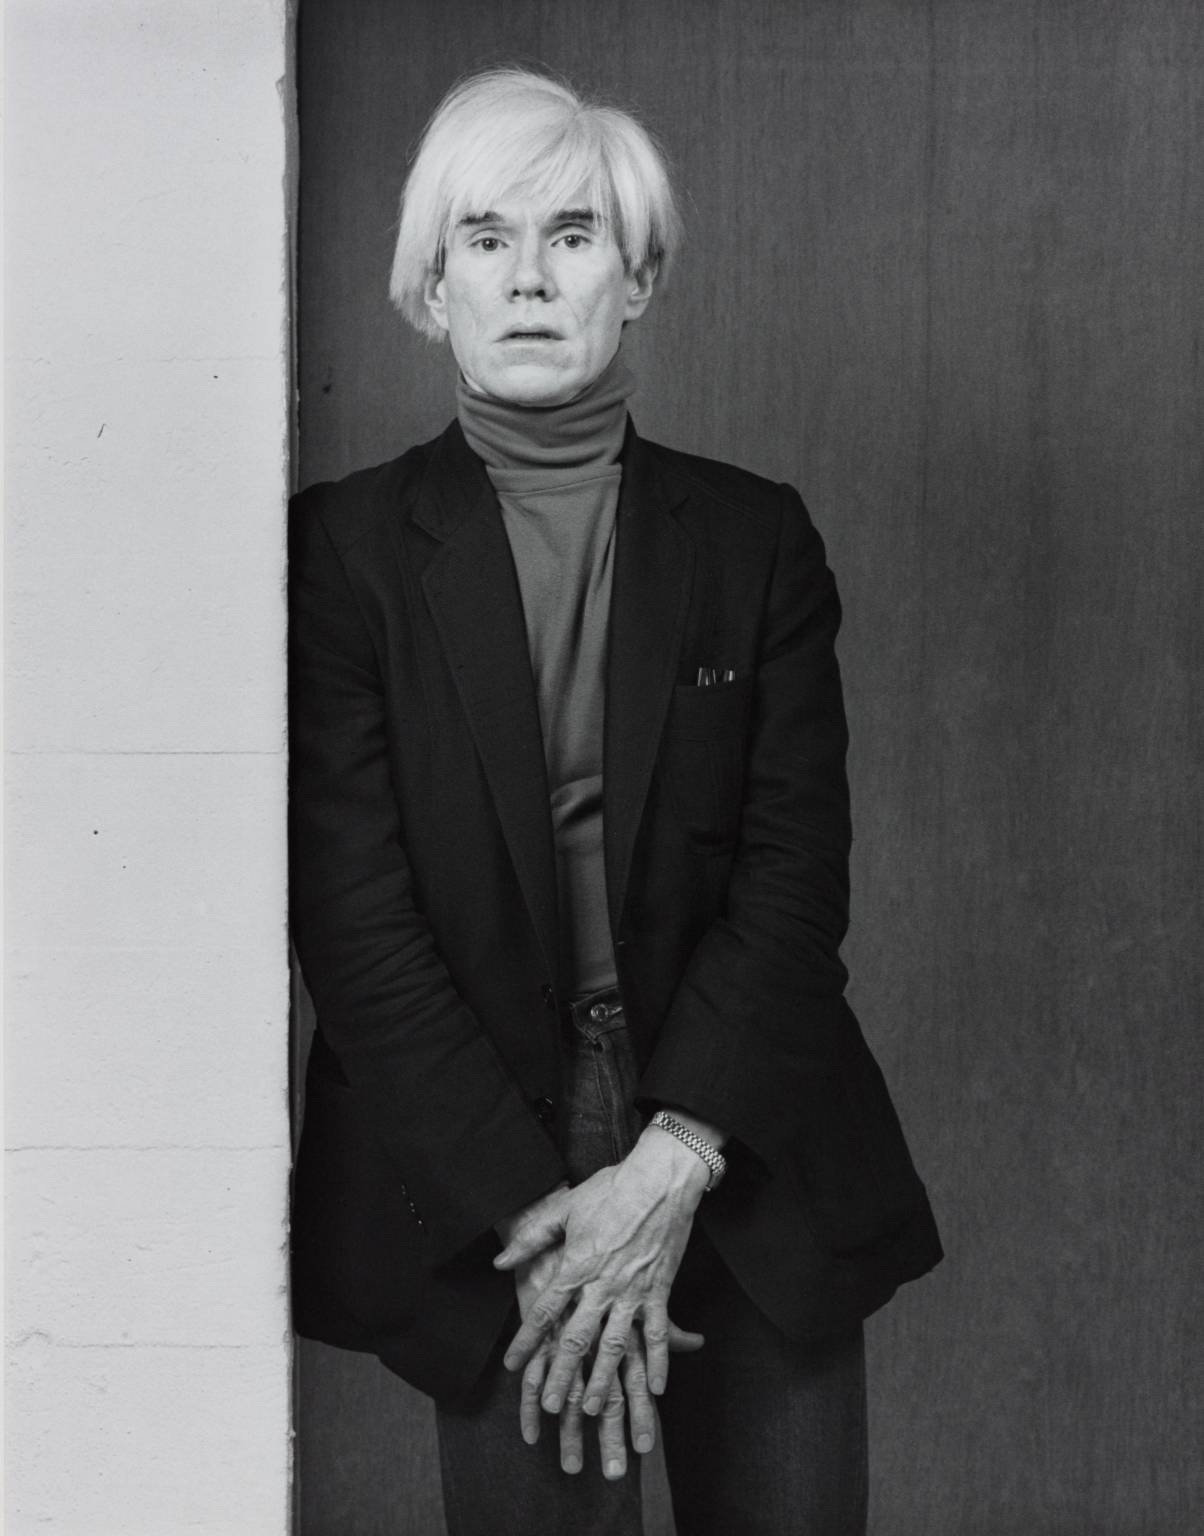 Andy Warhol, 1983 by Robert Mapplethorpe